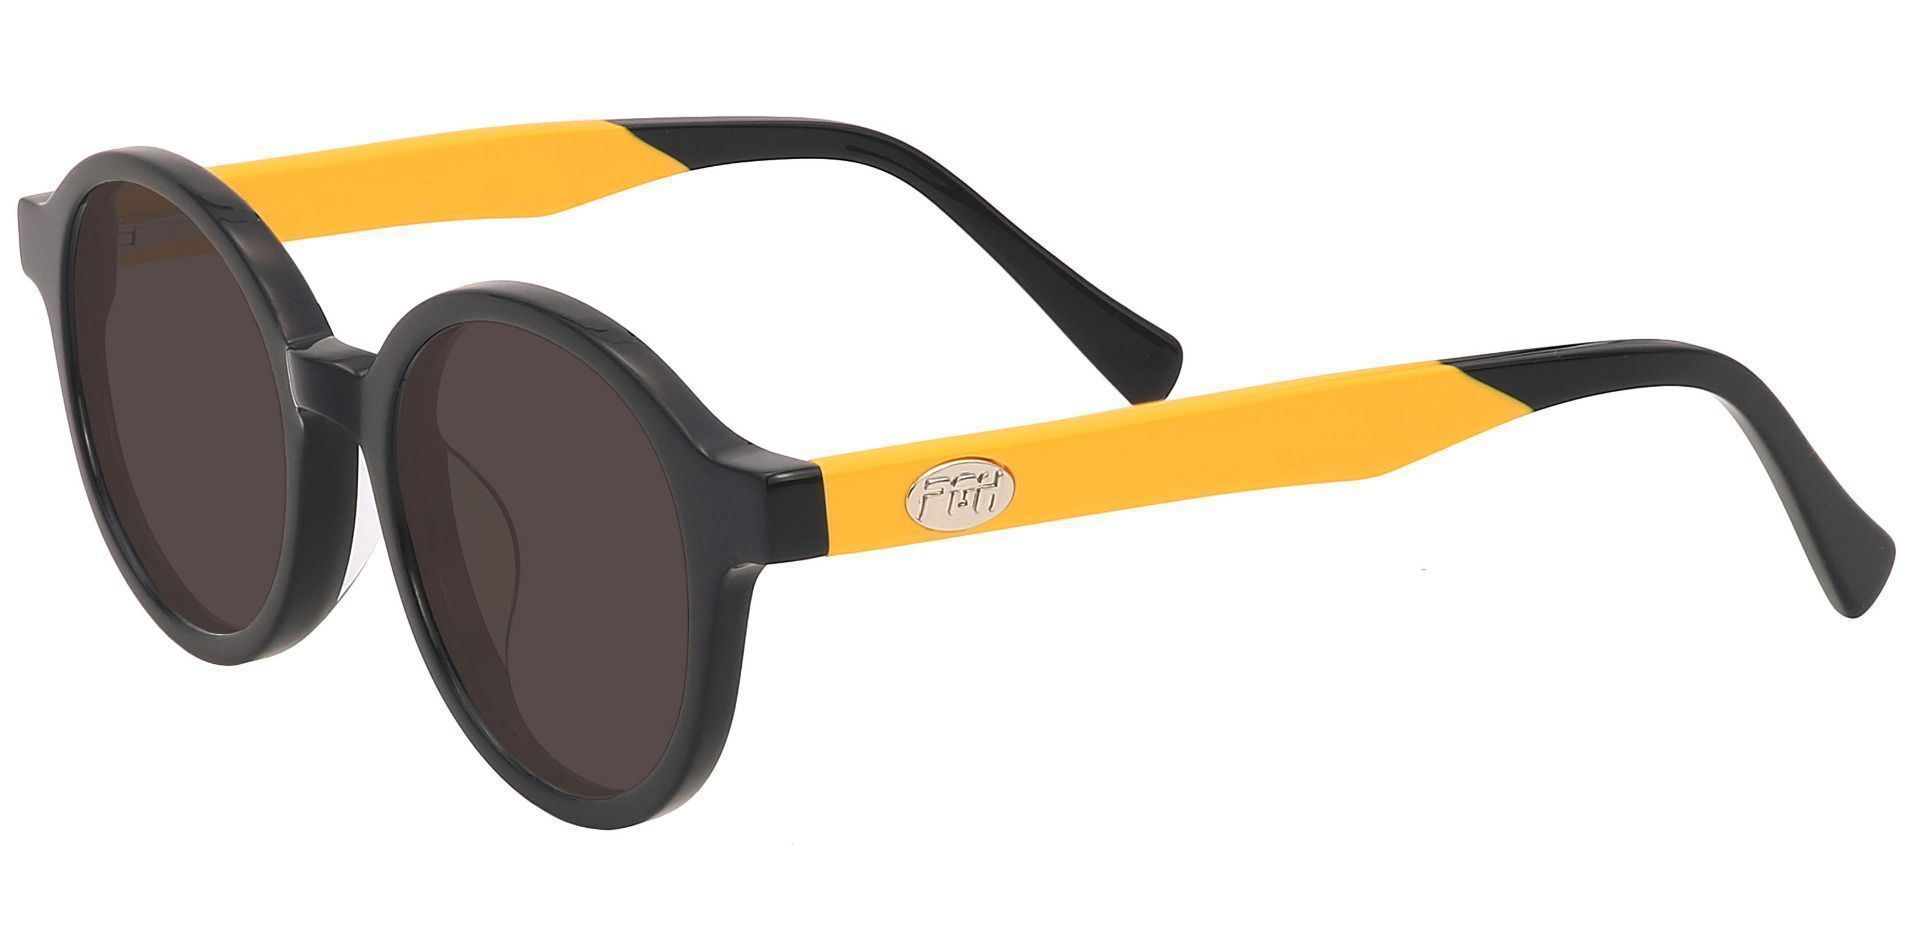 Champ Round Single Vision Sunglasses - Black Frame With Gray Lenses